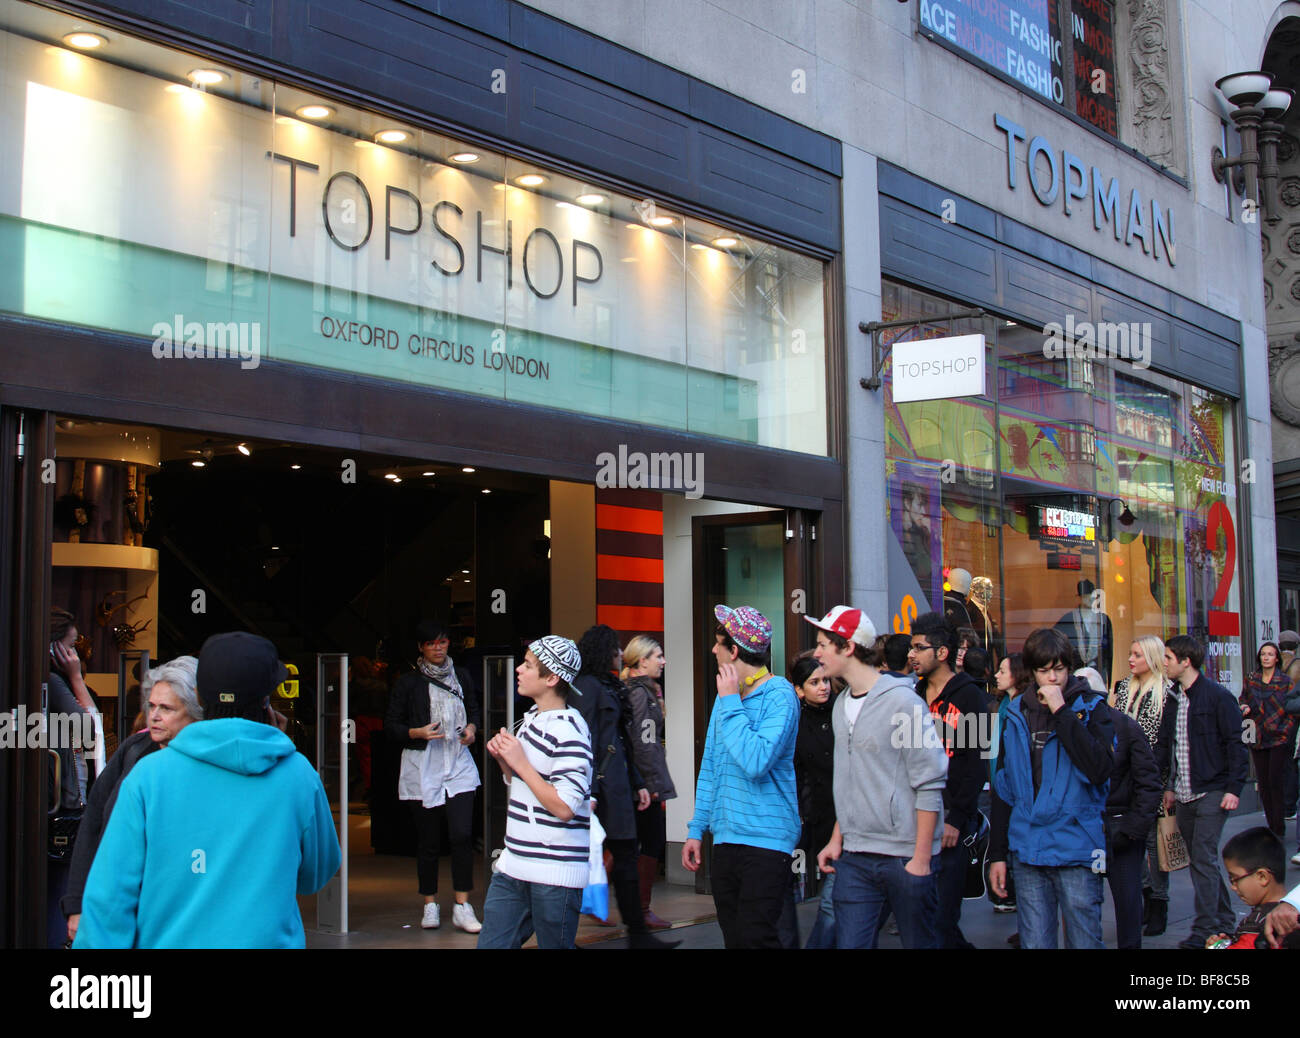 The Topshop retail fashion outlet, Oxford Street, London, England Stock  Photo - Alamy